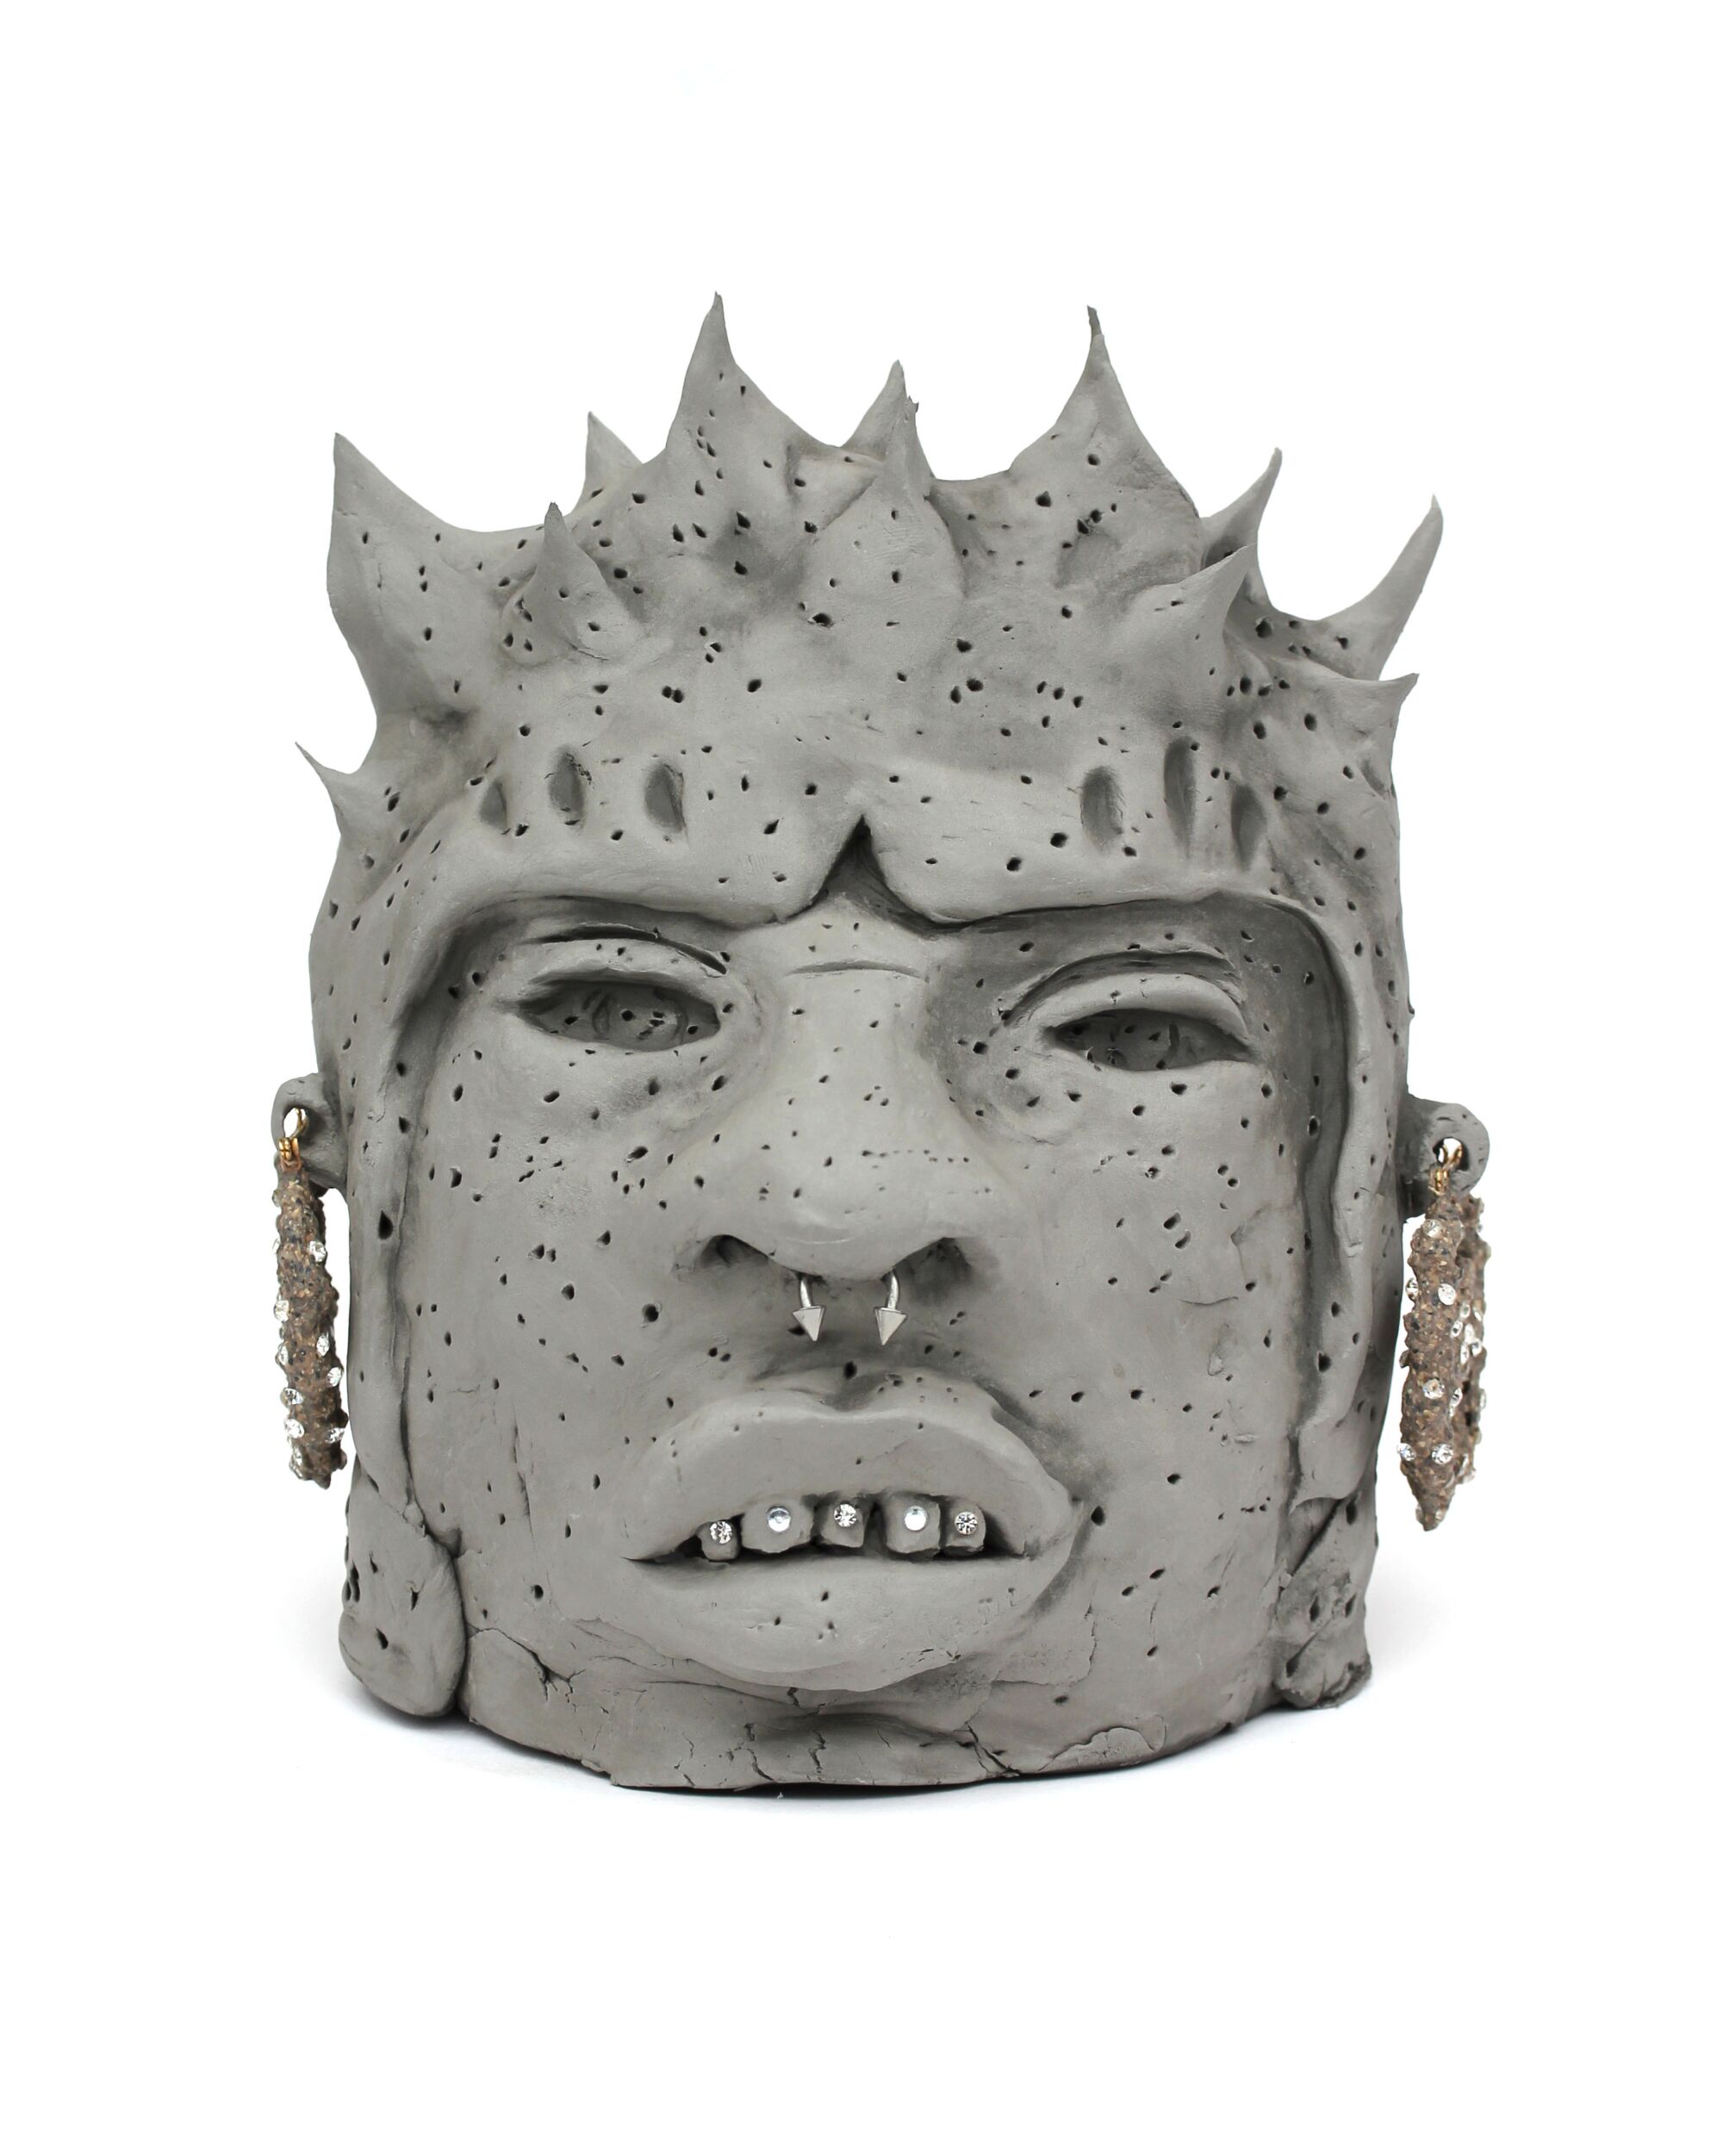 An Olmec head sculpture.